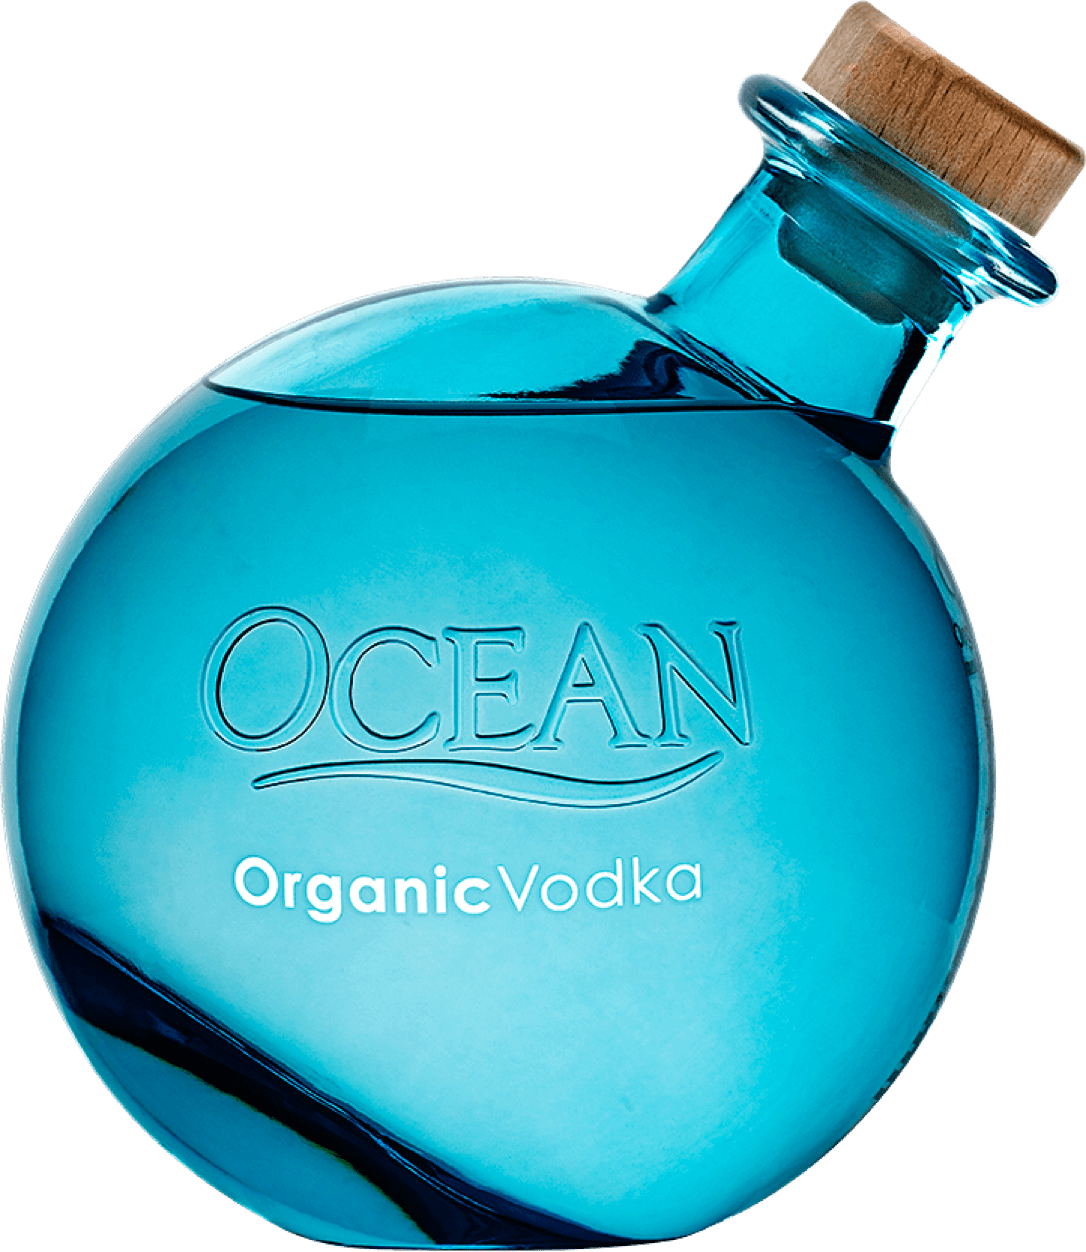 Bottle of Ocean Organic Vodka with sunset background